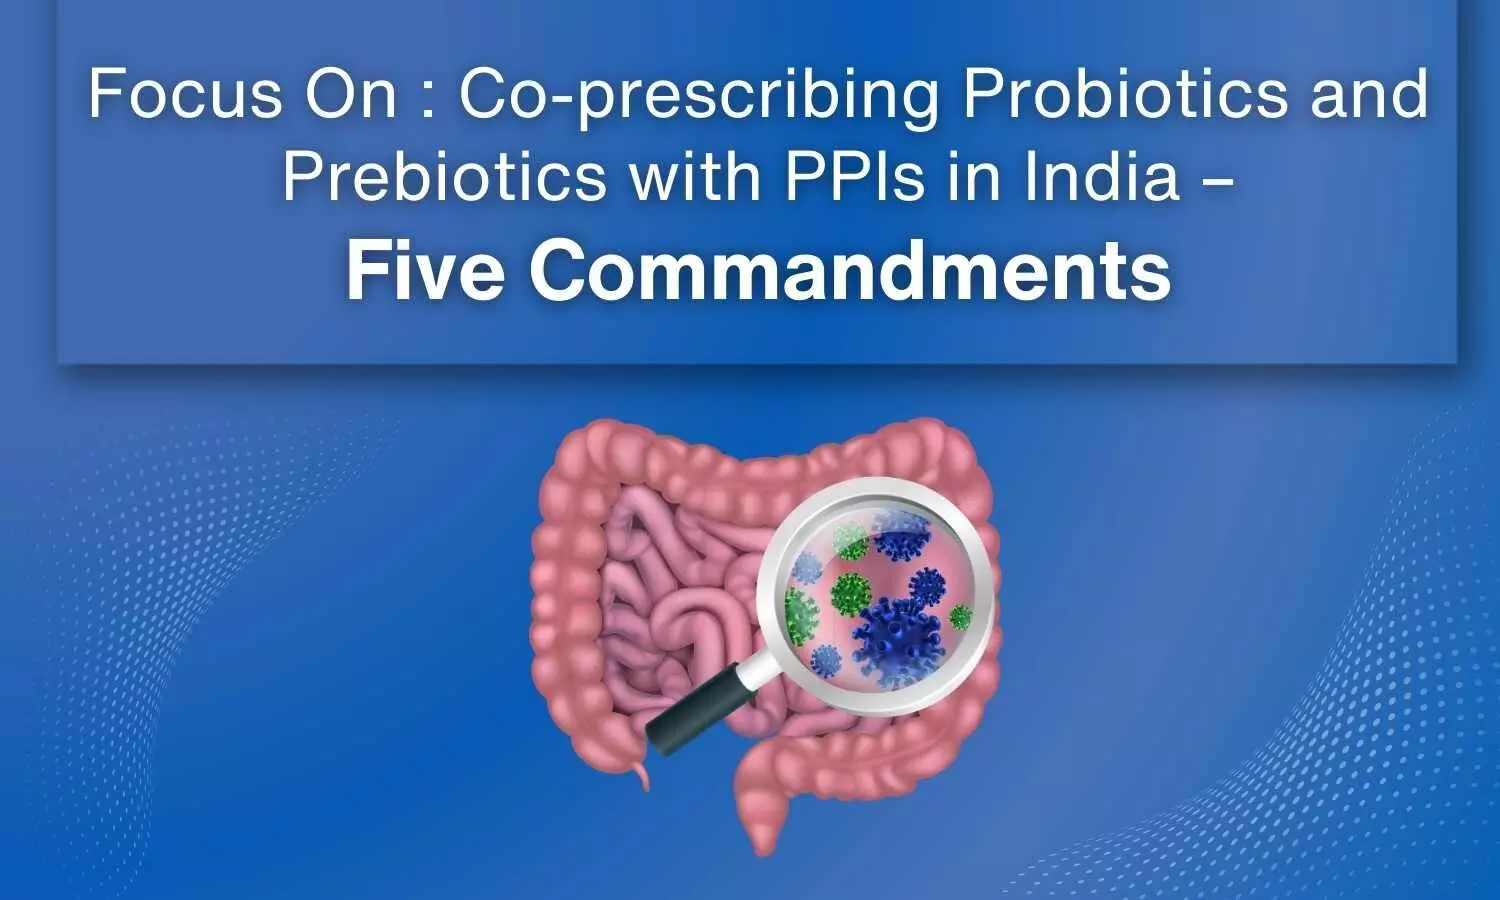 Focus On: Co-prescribing Probiotics and Prebiotics with PPIs in India - Five Commandments